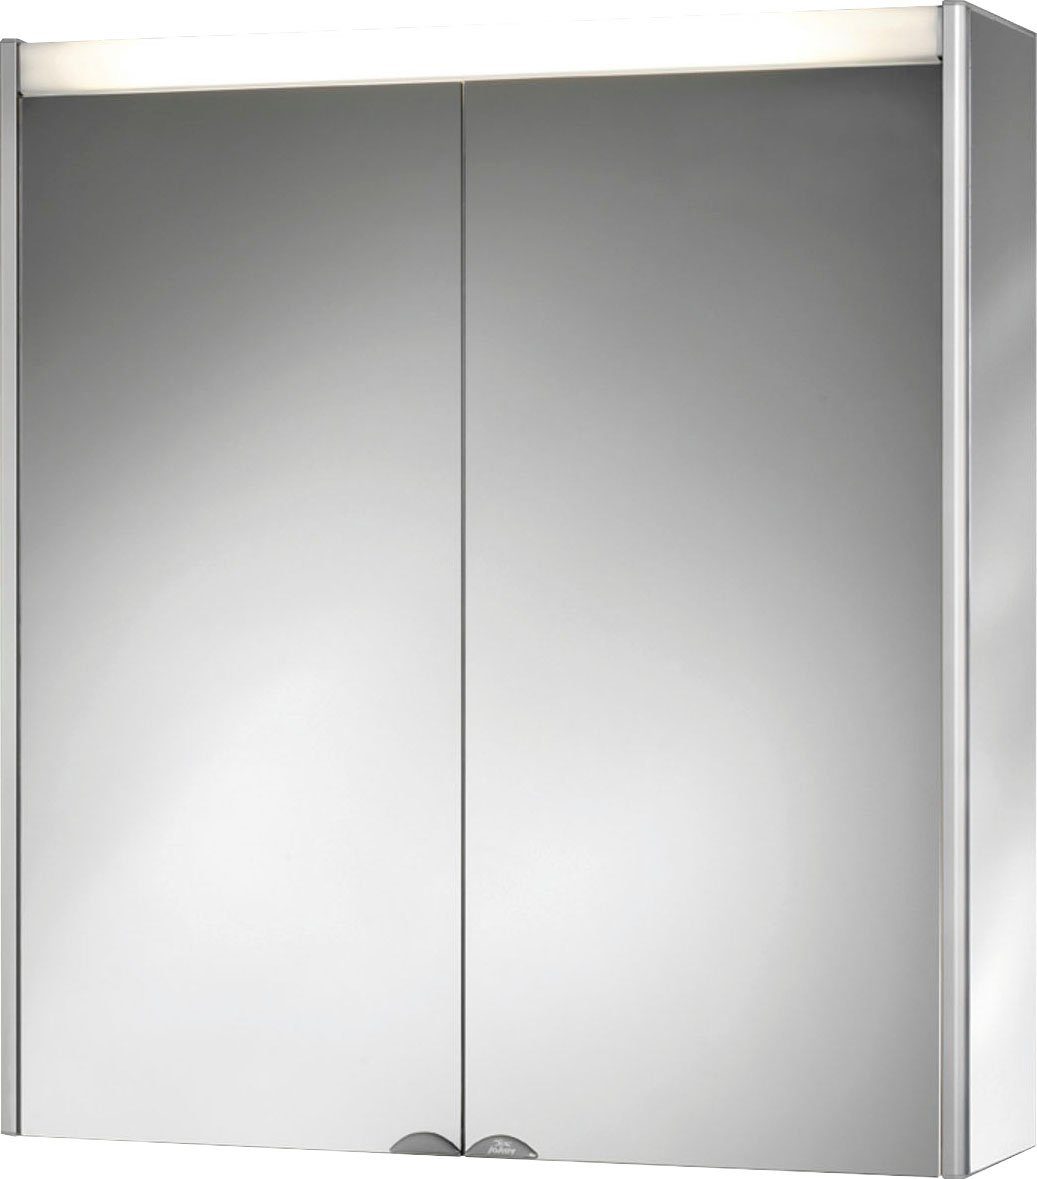 | Alu Aluminium/Spiegel LED Spiegelschrank 65,4cm jokey Dekor breit Spiegel Aluminium,